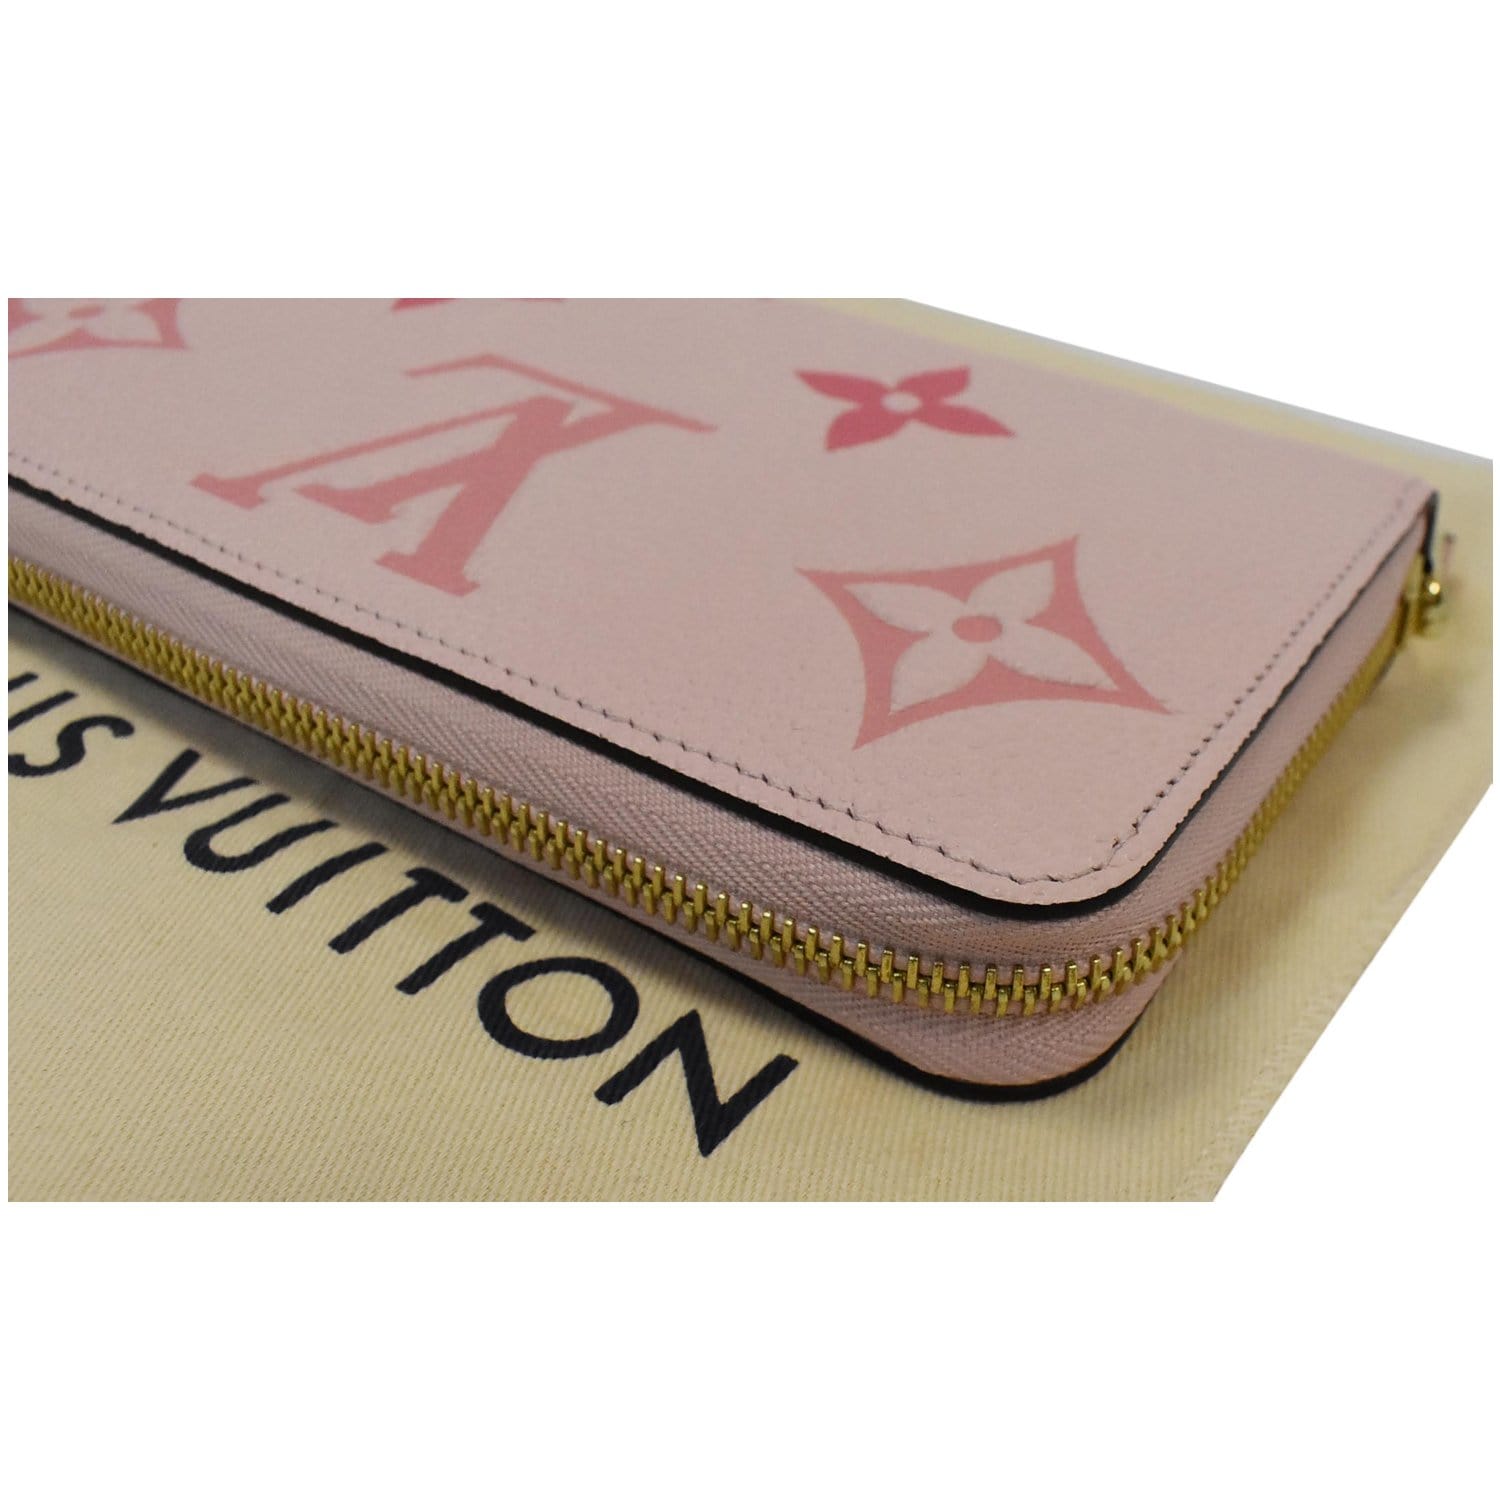 Louis Vuitton Zippy Wallet Bicolor Monogram Empreinte Giant Pink